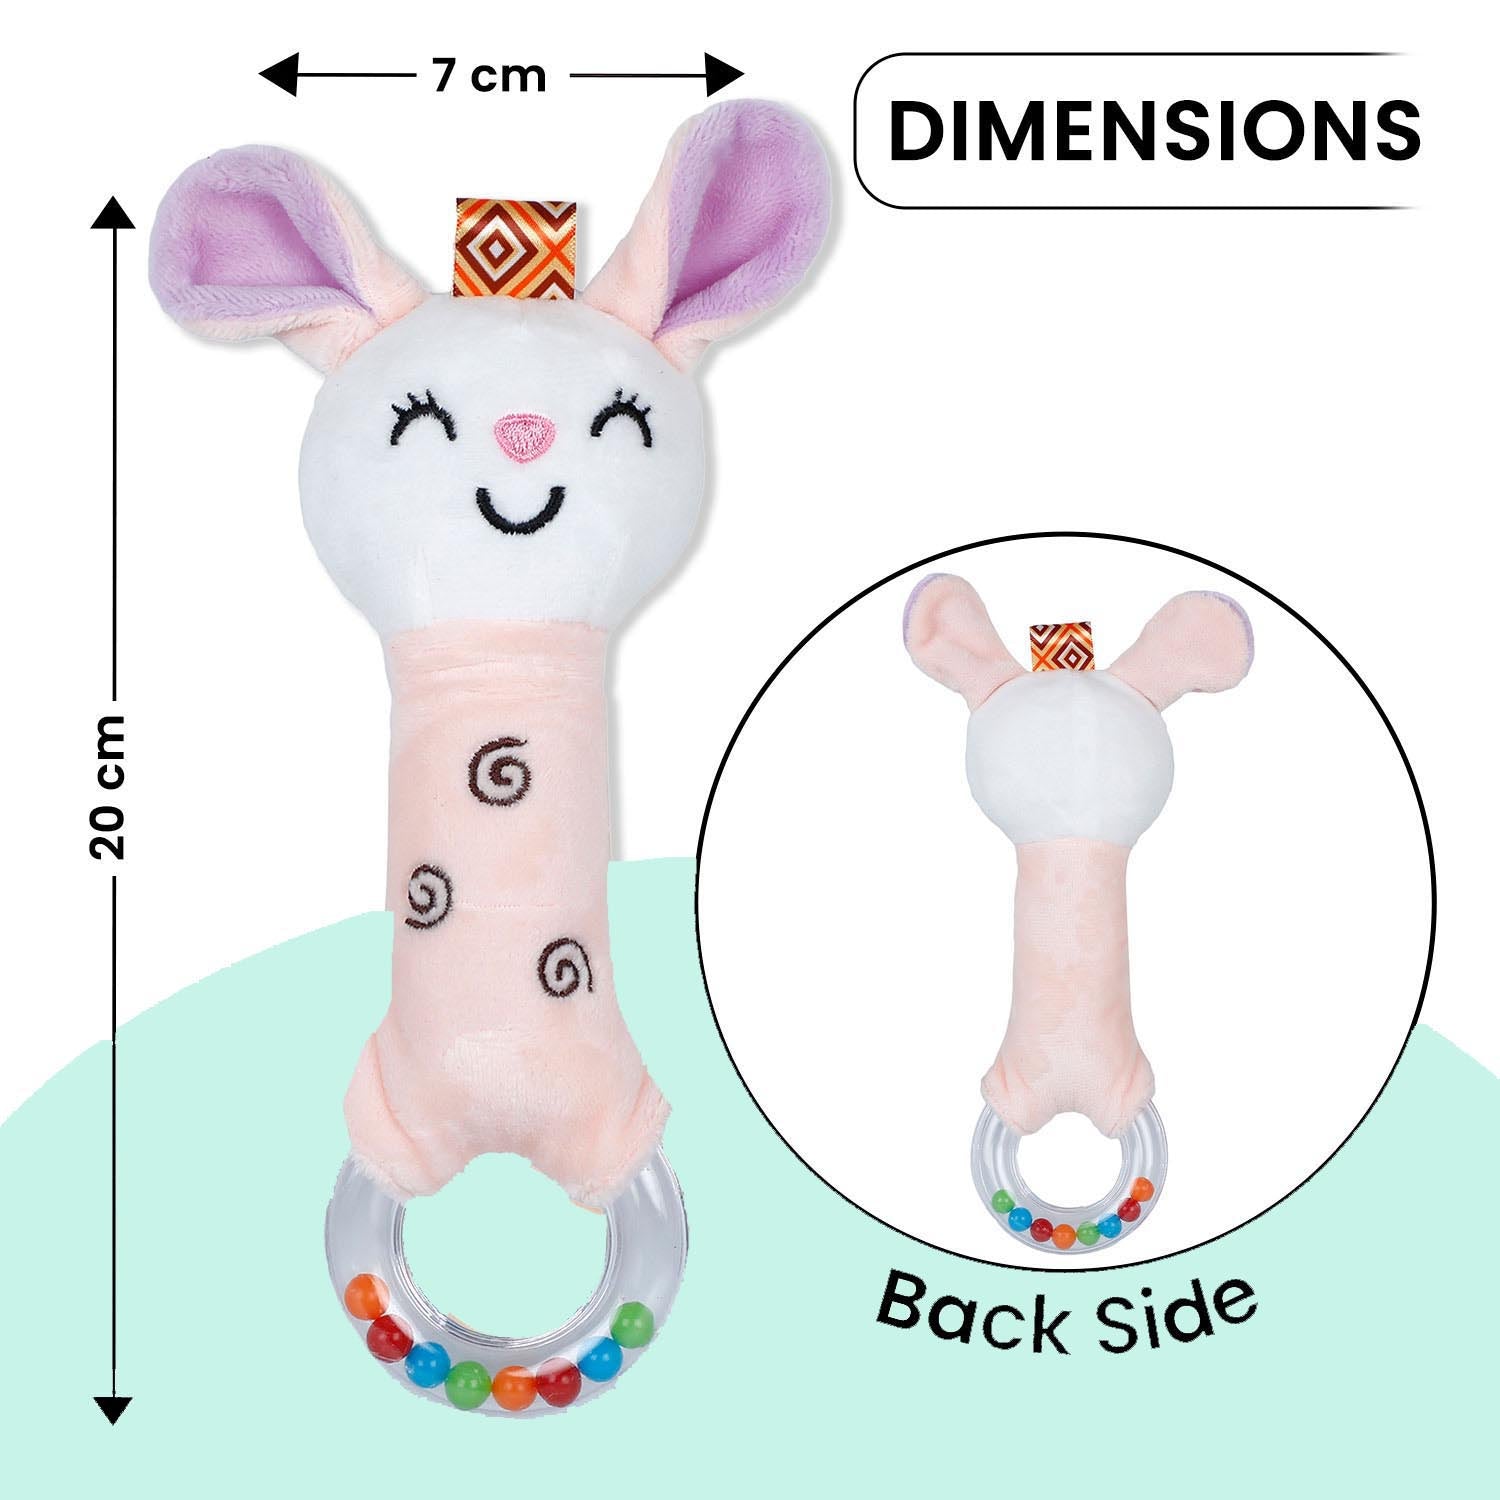 Baby Moo Gentle Bunny Squeaker Sound Handheld Rattle Toy - Peach